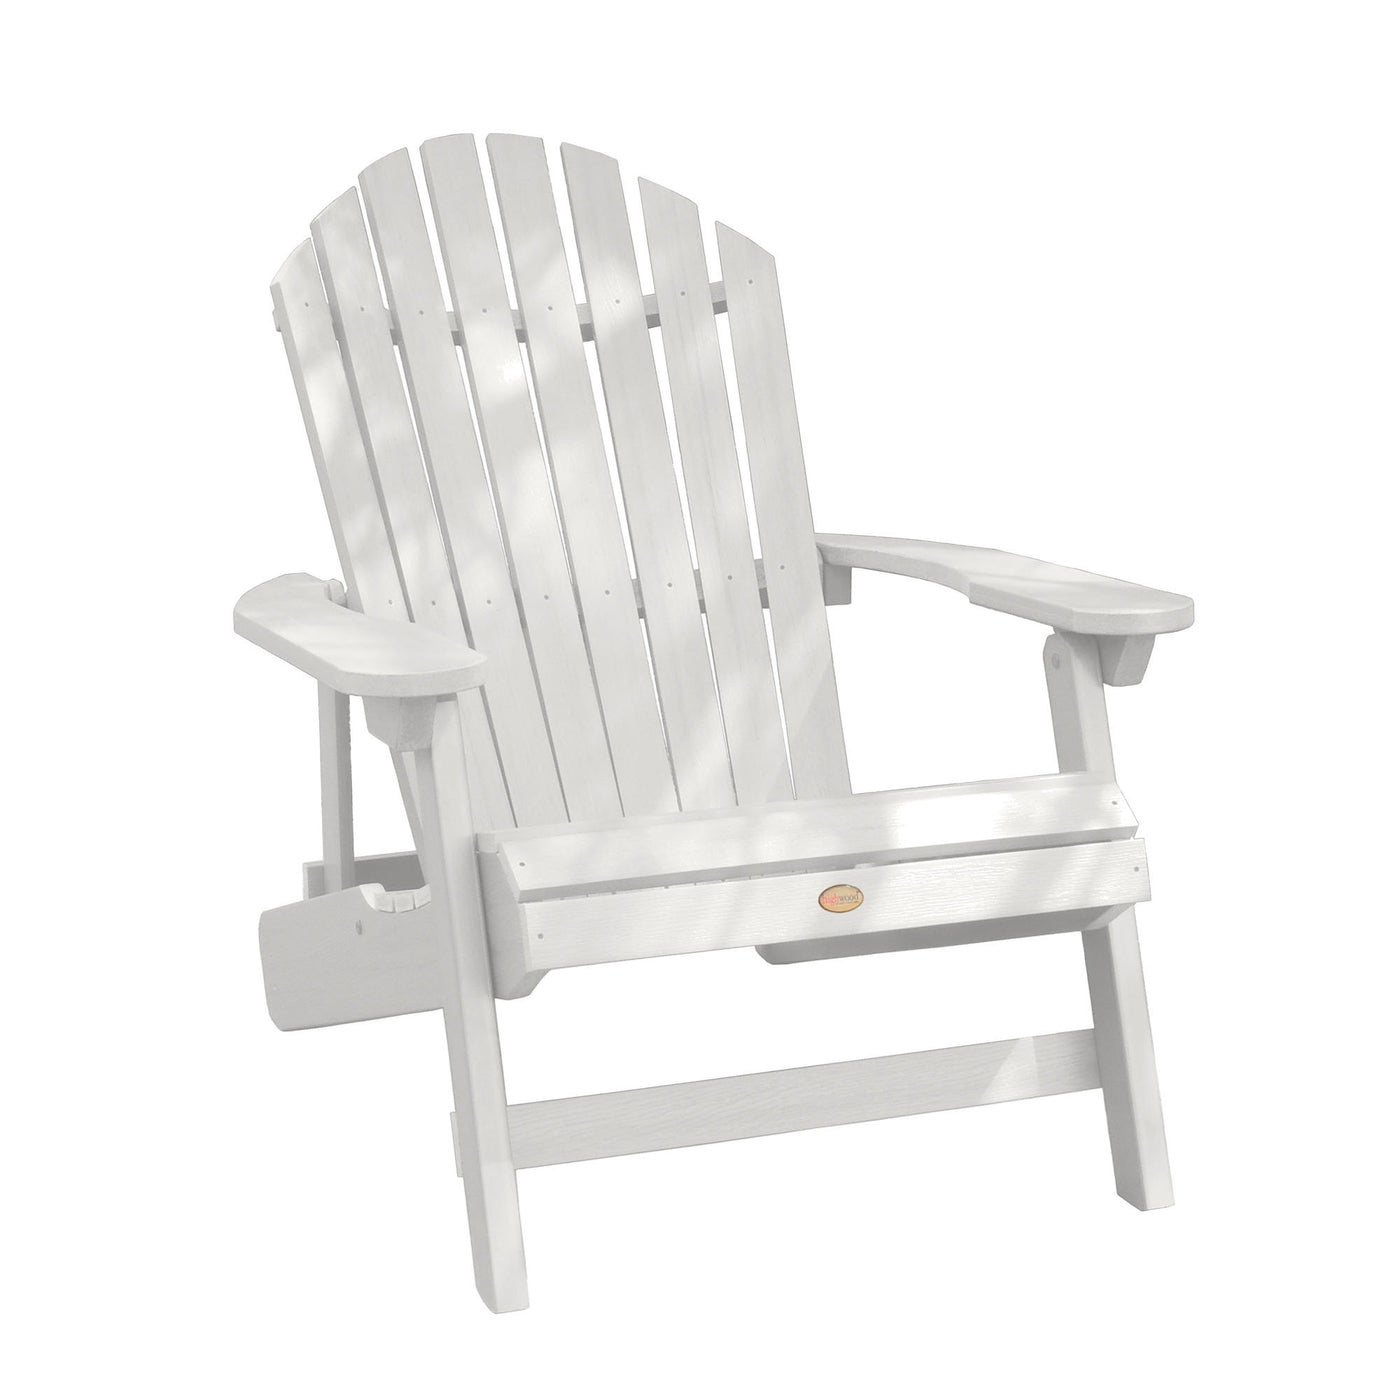 Refurbished King Hamilton Folding & Reclining Adirondack Chair Highwood USA White 